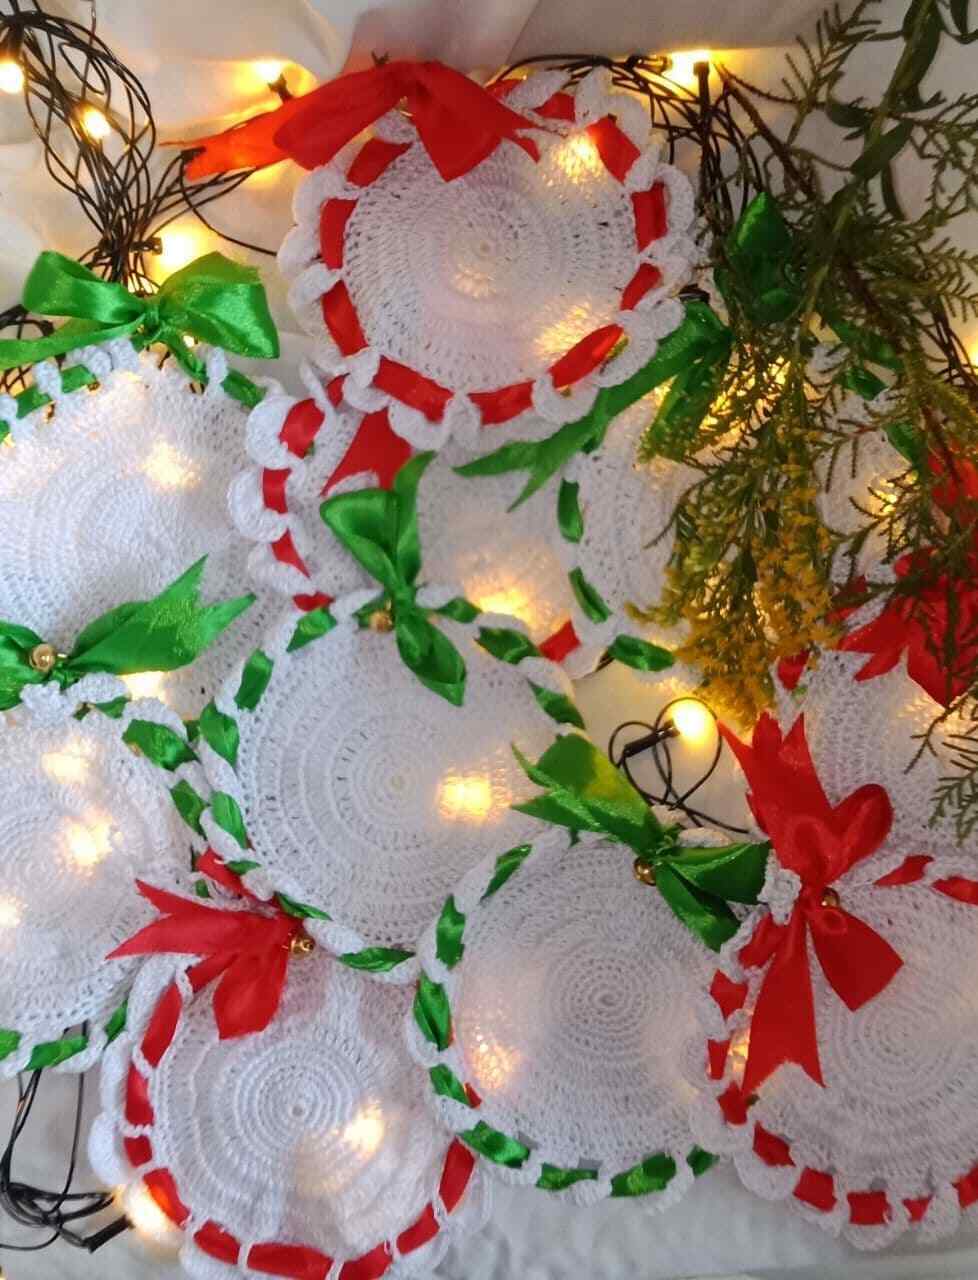 Handmade Christmas Decoration Yarn Woven Snow Flakes Vine & Hanging Red & Green